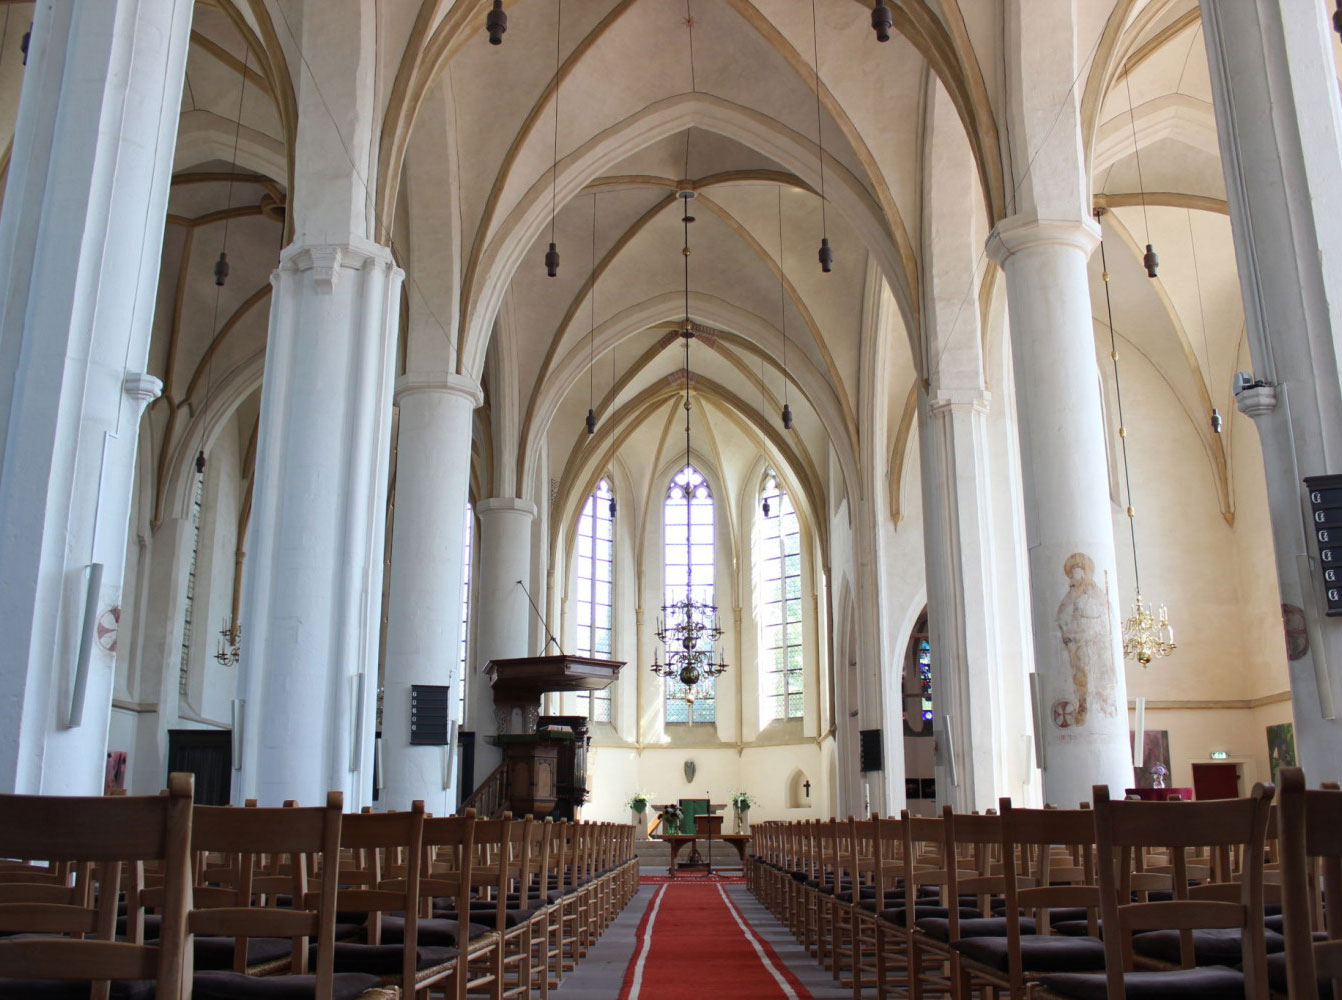 Gudulakerk interieur